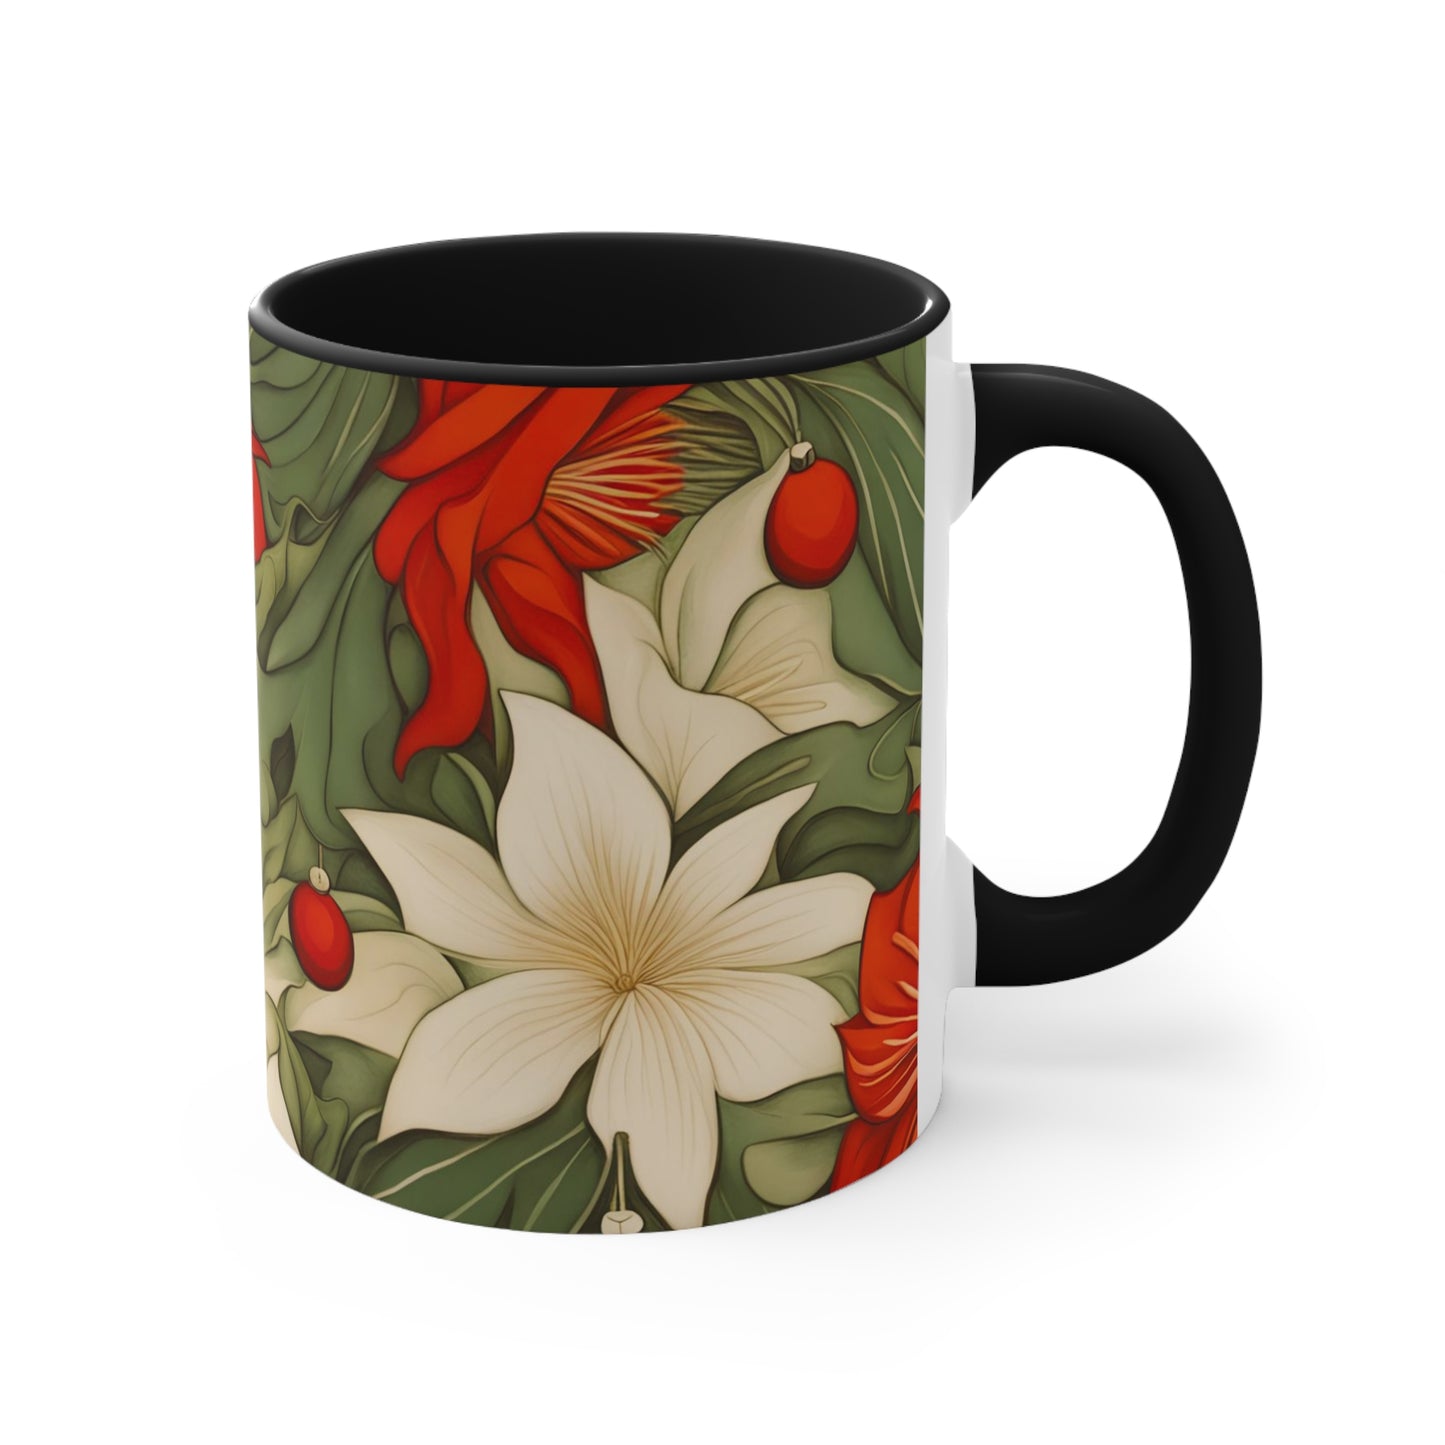 Christmas Flowers, Ceramic Mug - Perfect for Coffee, Tea, and More!